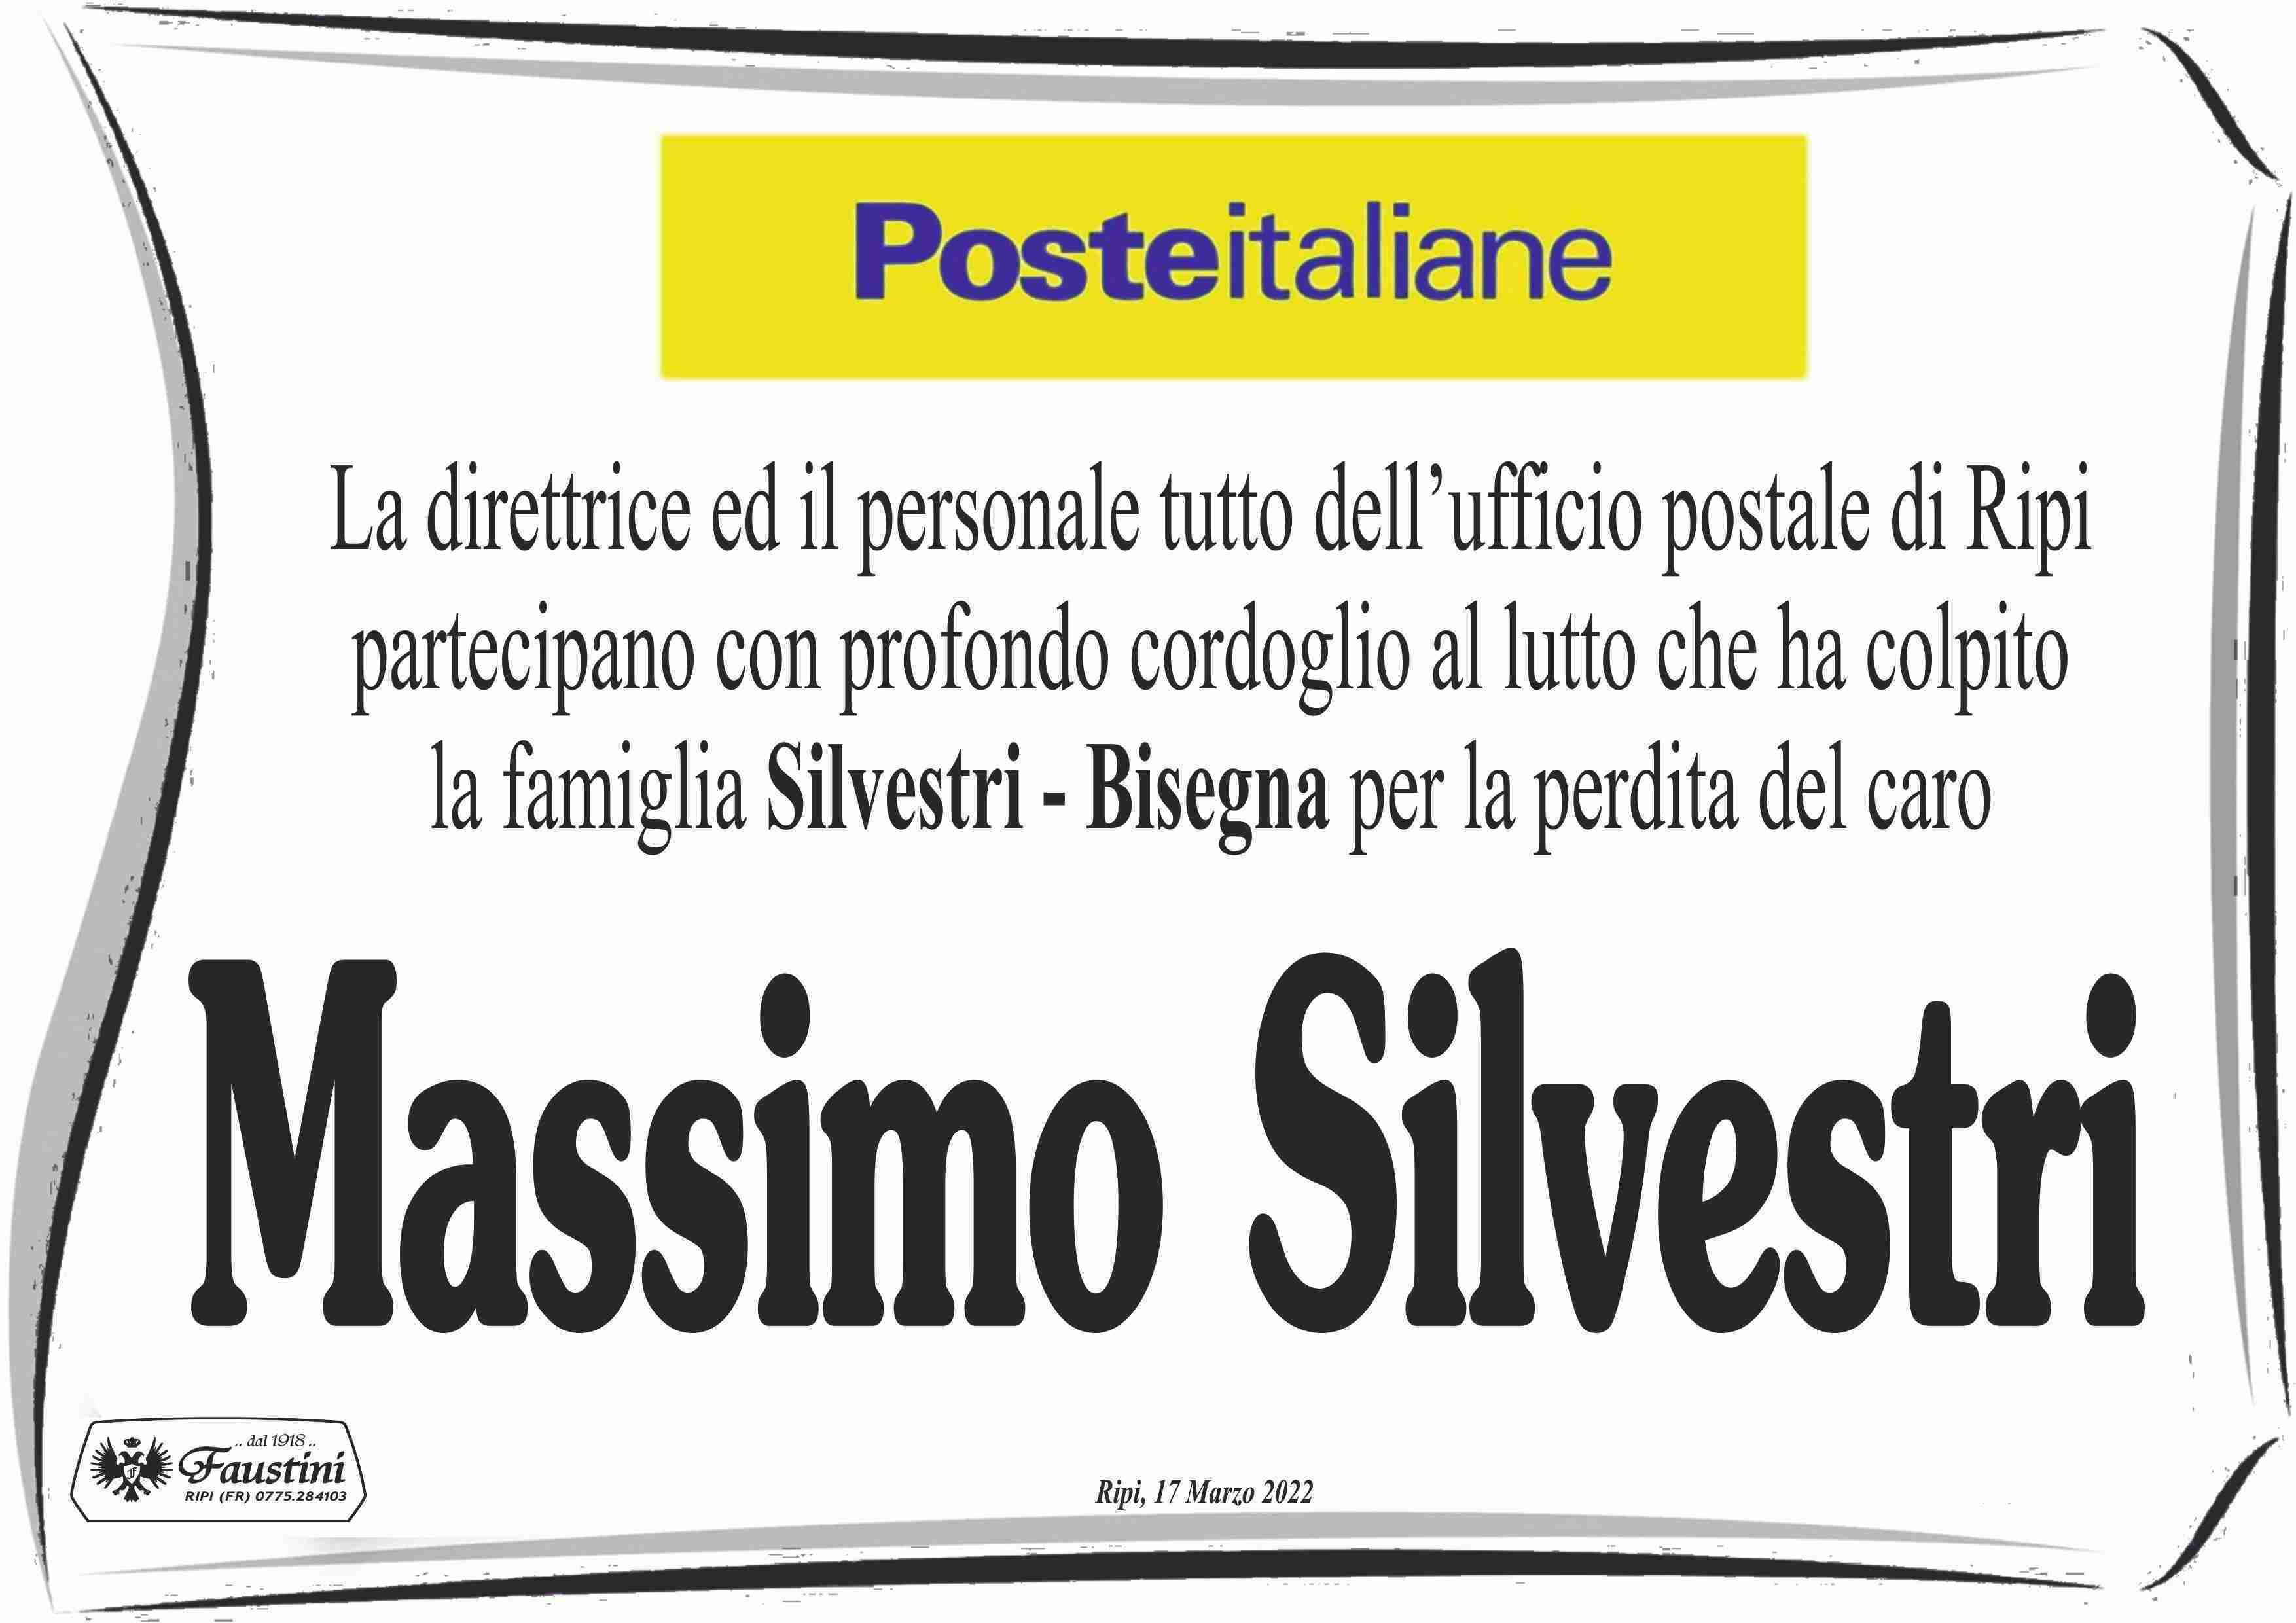 Massimo Silvestri